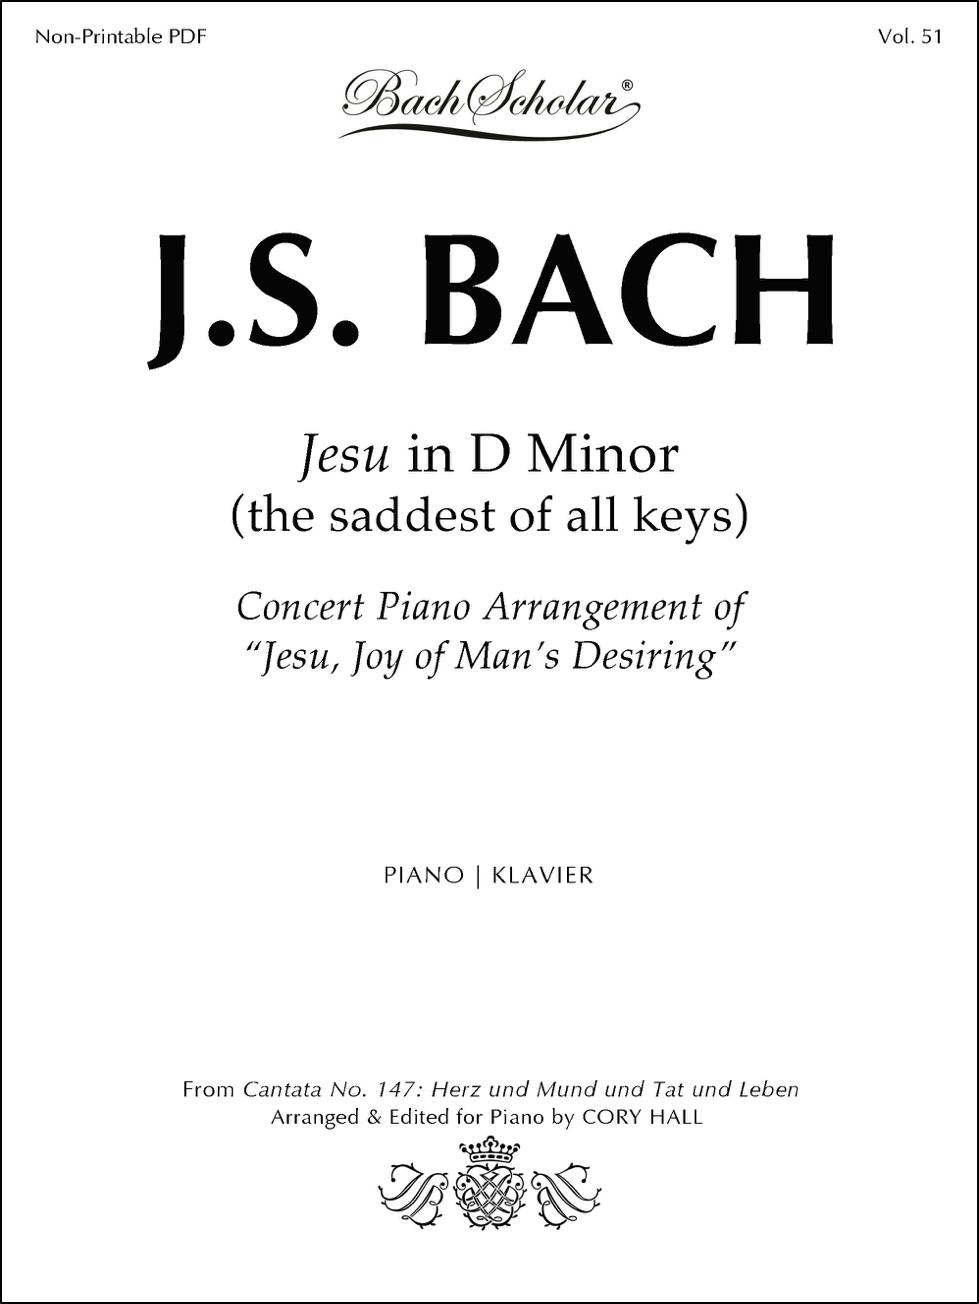 J.S. BACH: Jesu in D Minor | the saddest of all keys (arr. Hall) —  BachScholar®